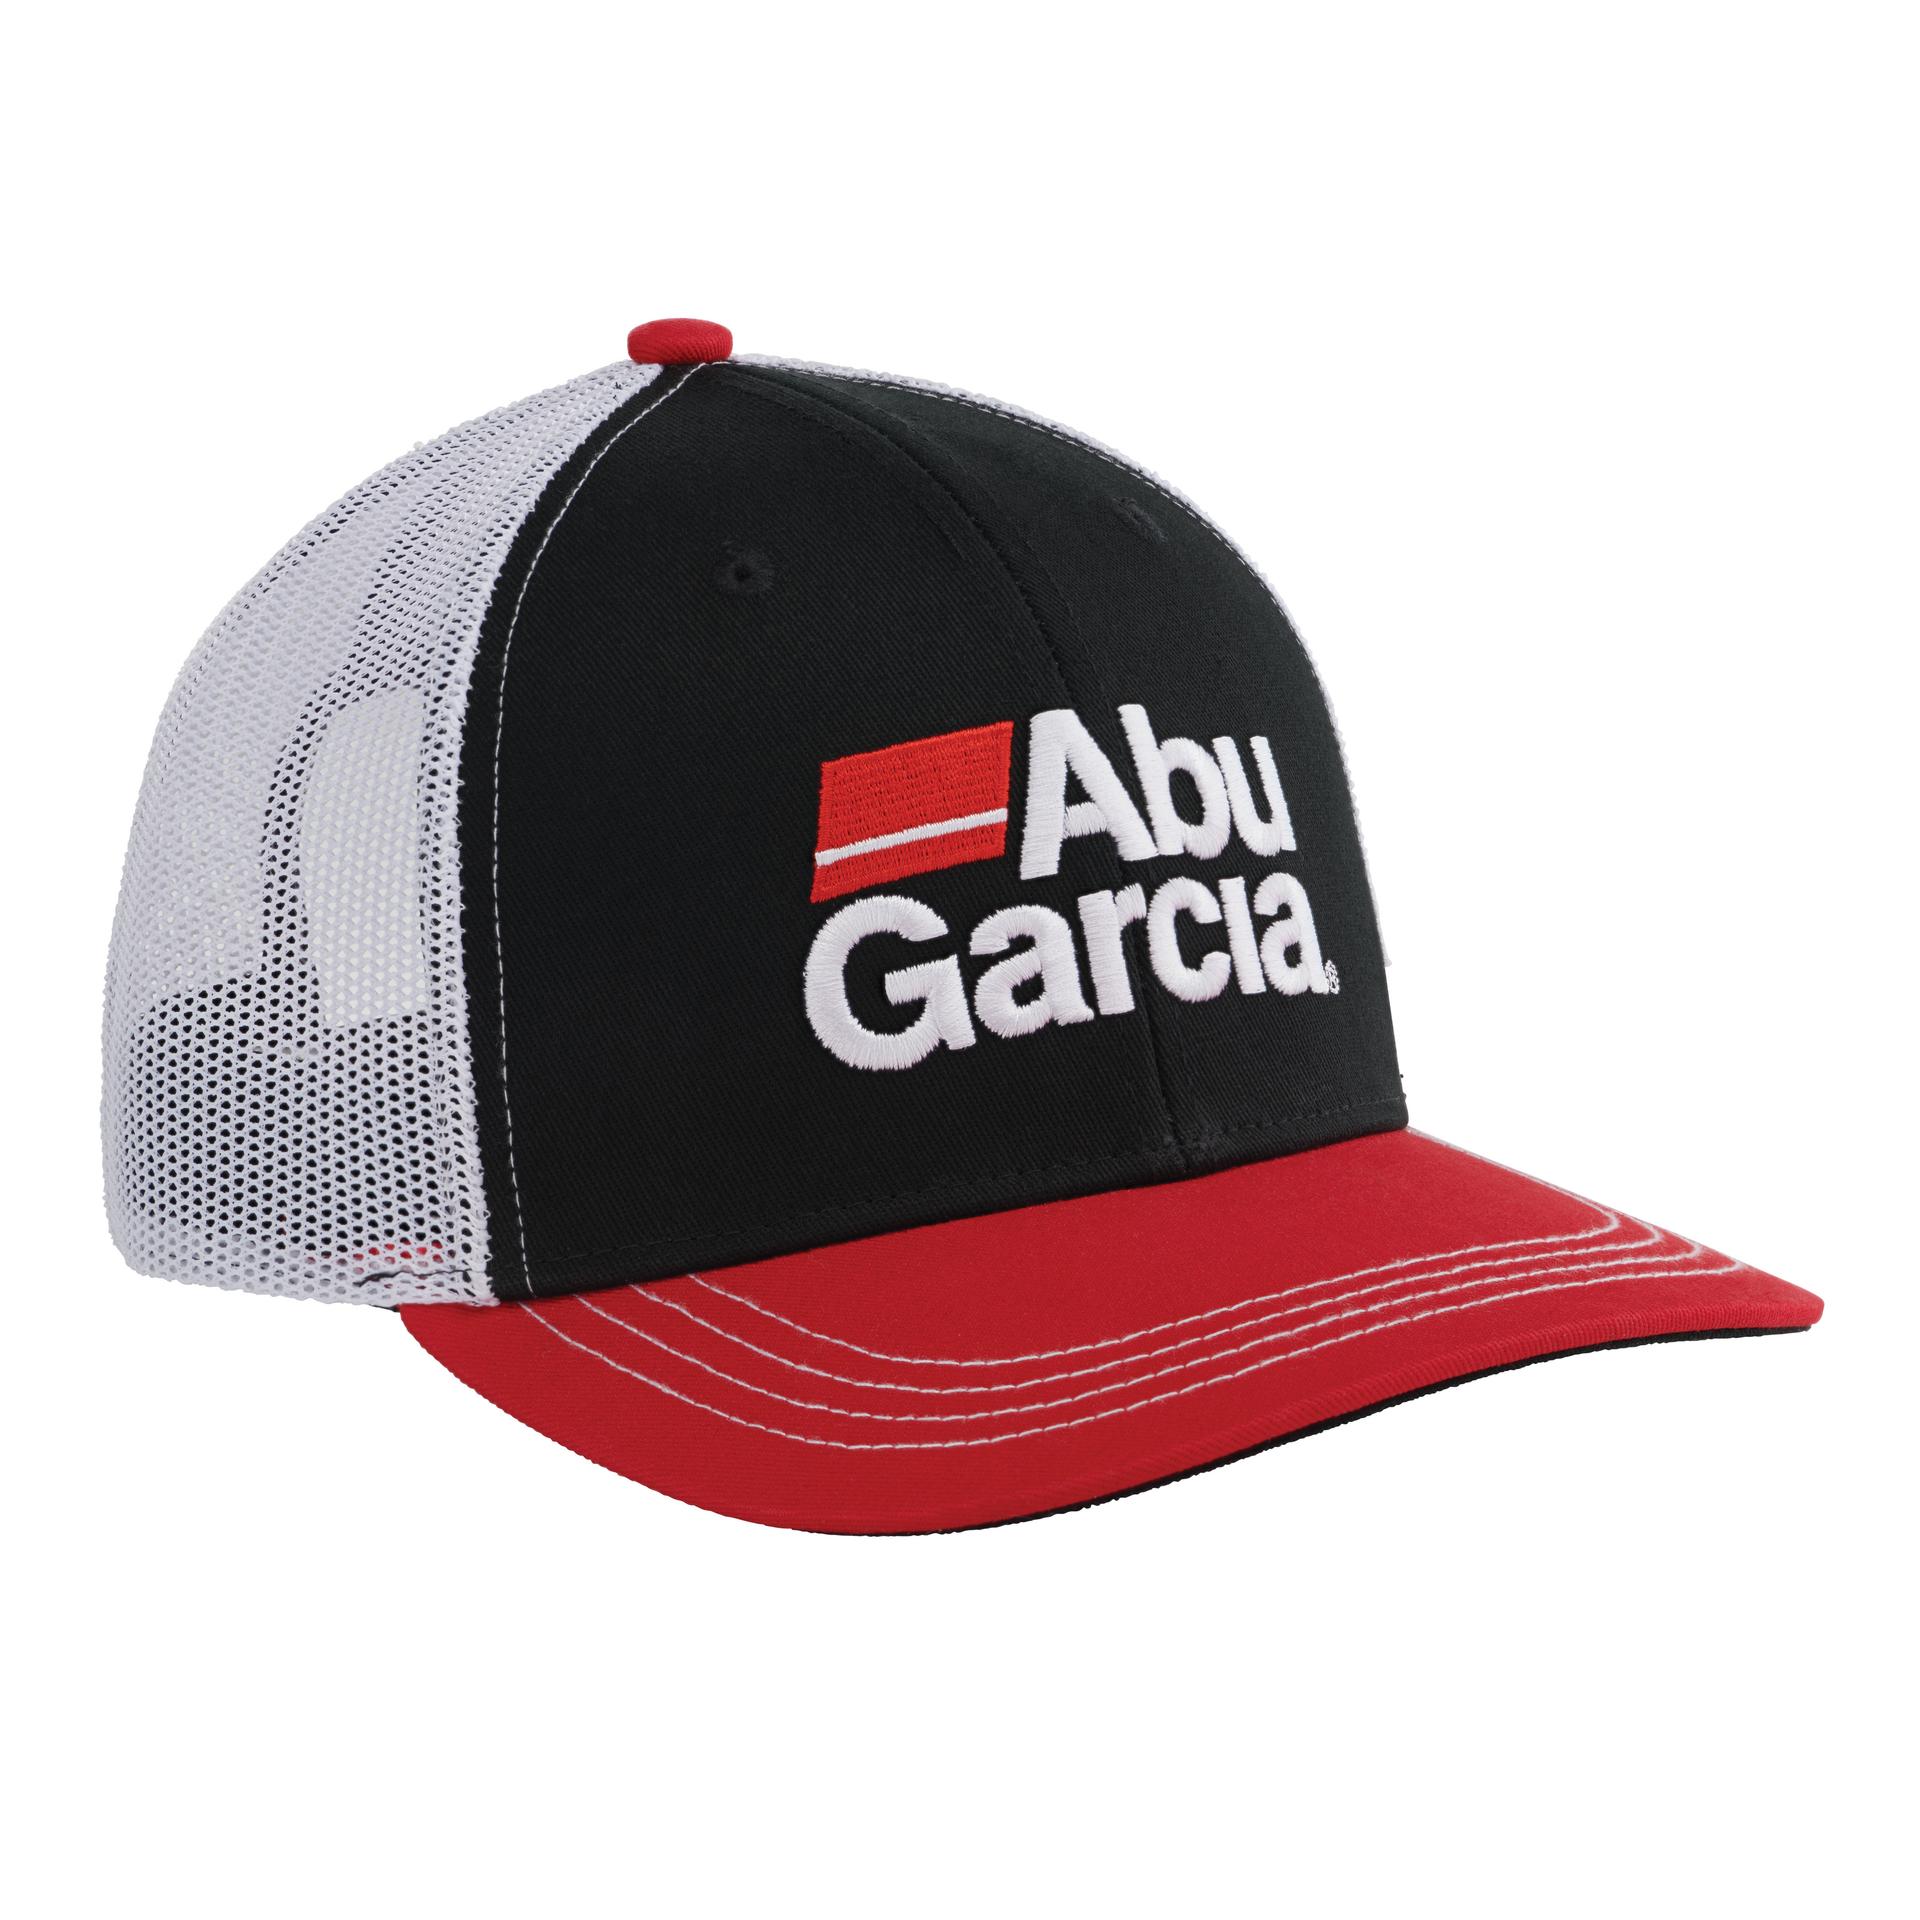 Abu Garcia Original Trucker Hat - Black/Red/White, One Size Fits Most